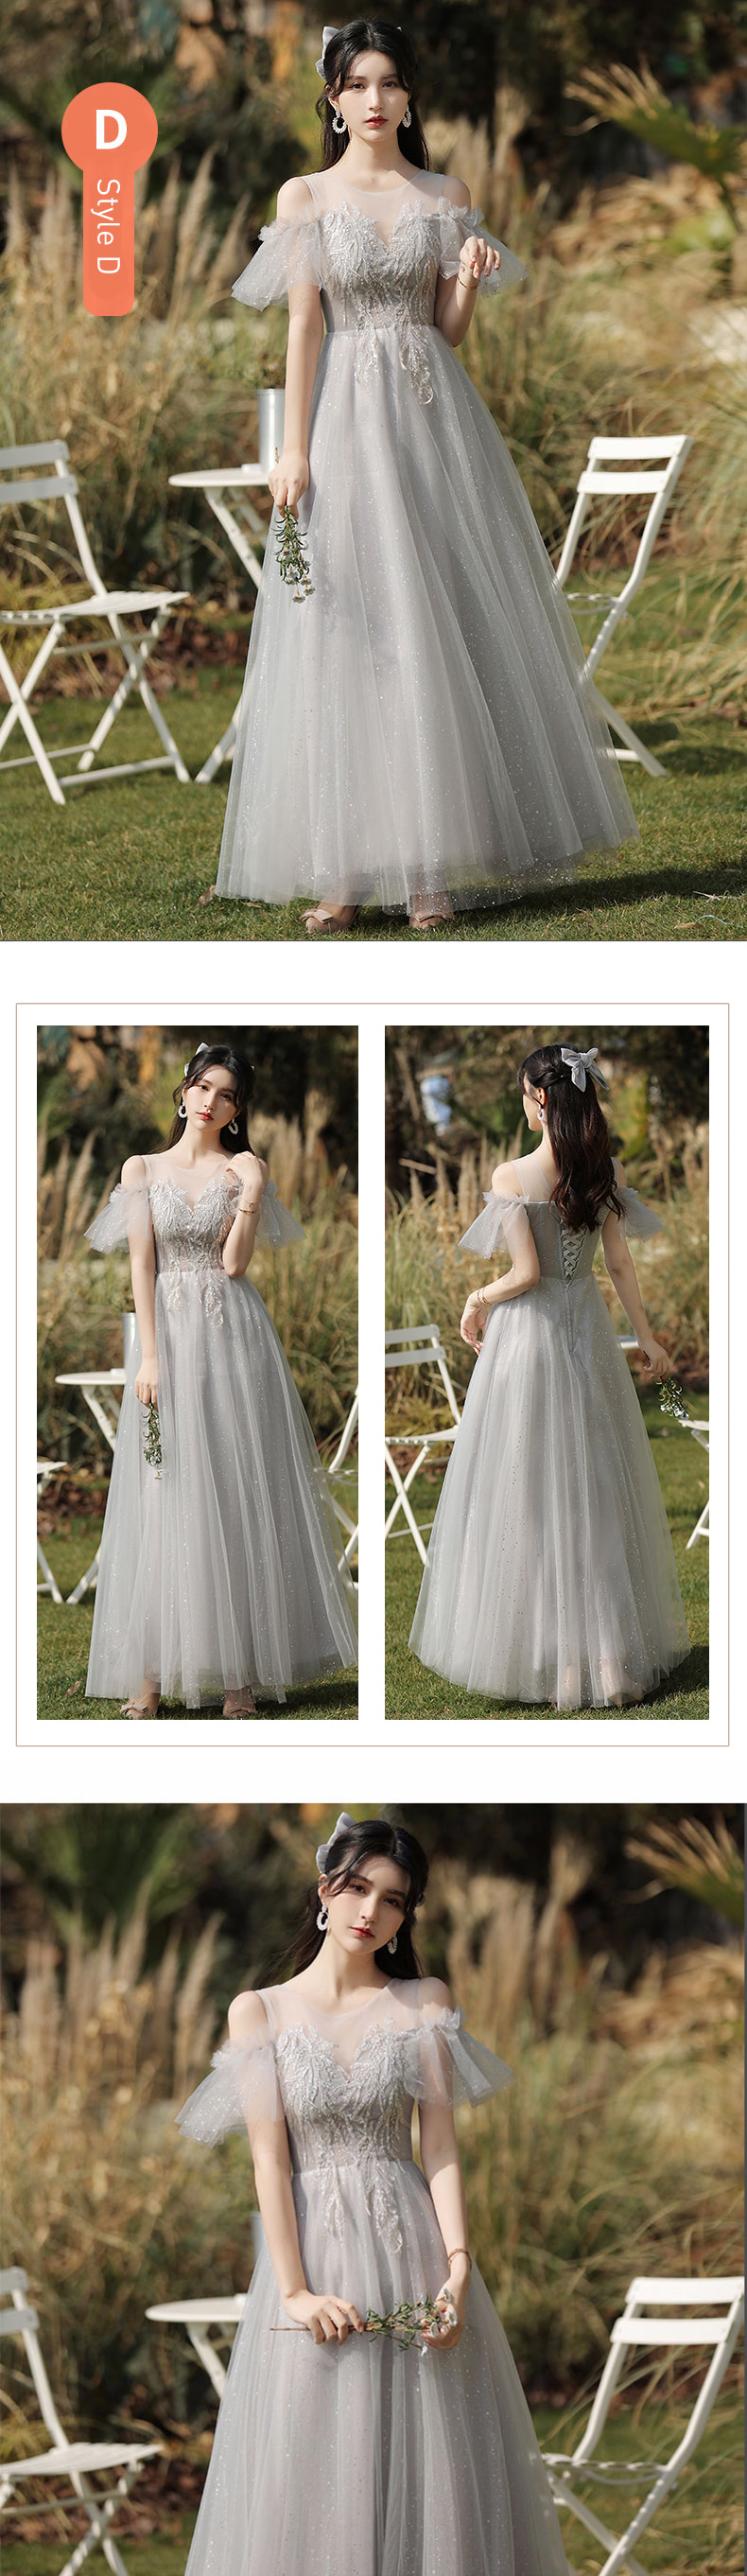 Beautiful-Gray-Occasion-Prom-Bridesmaid-Evening-Maxi-Dress20.jpg